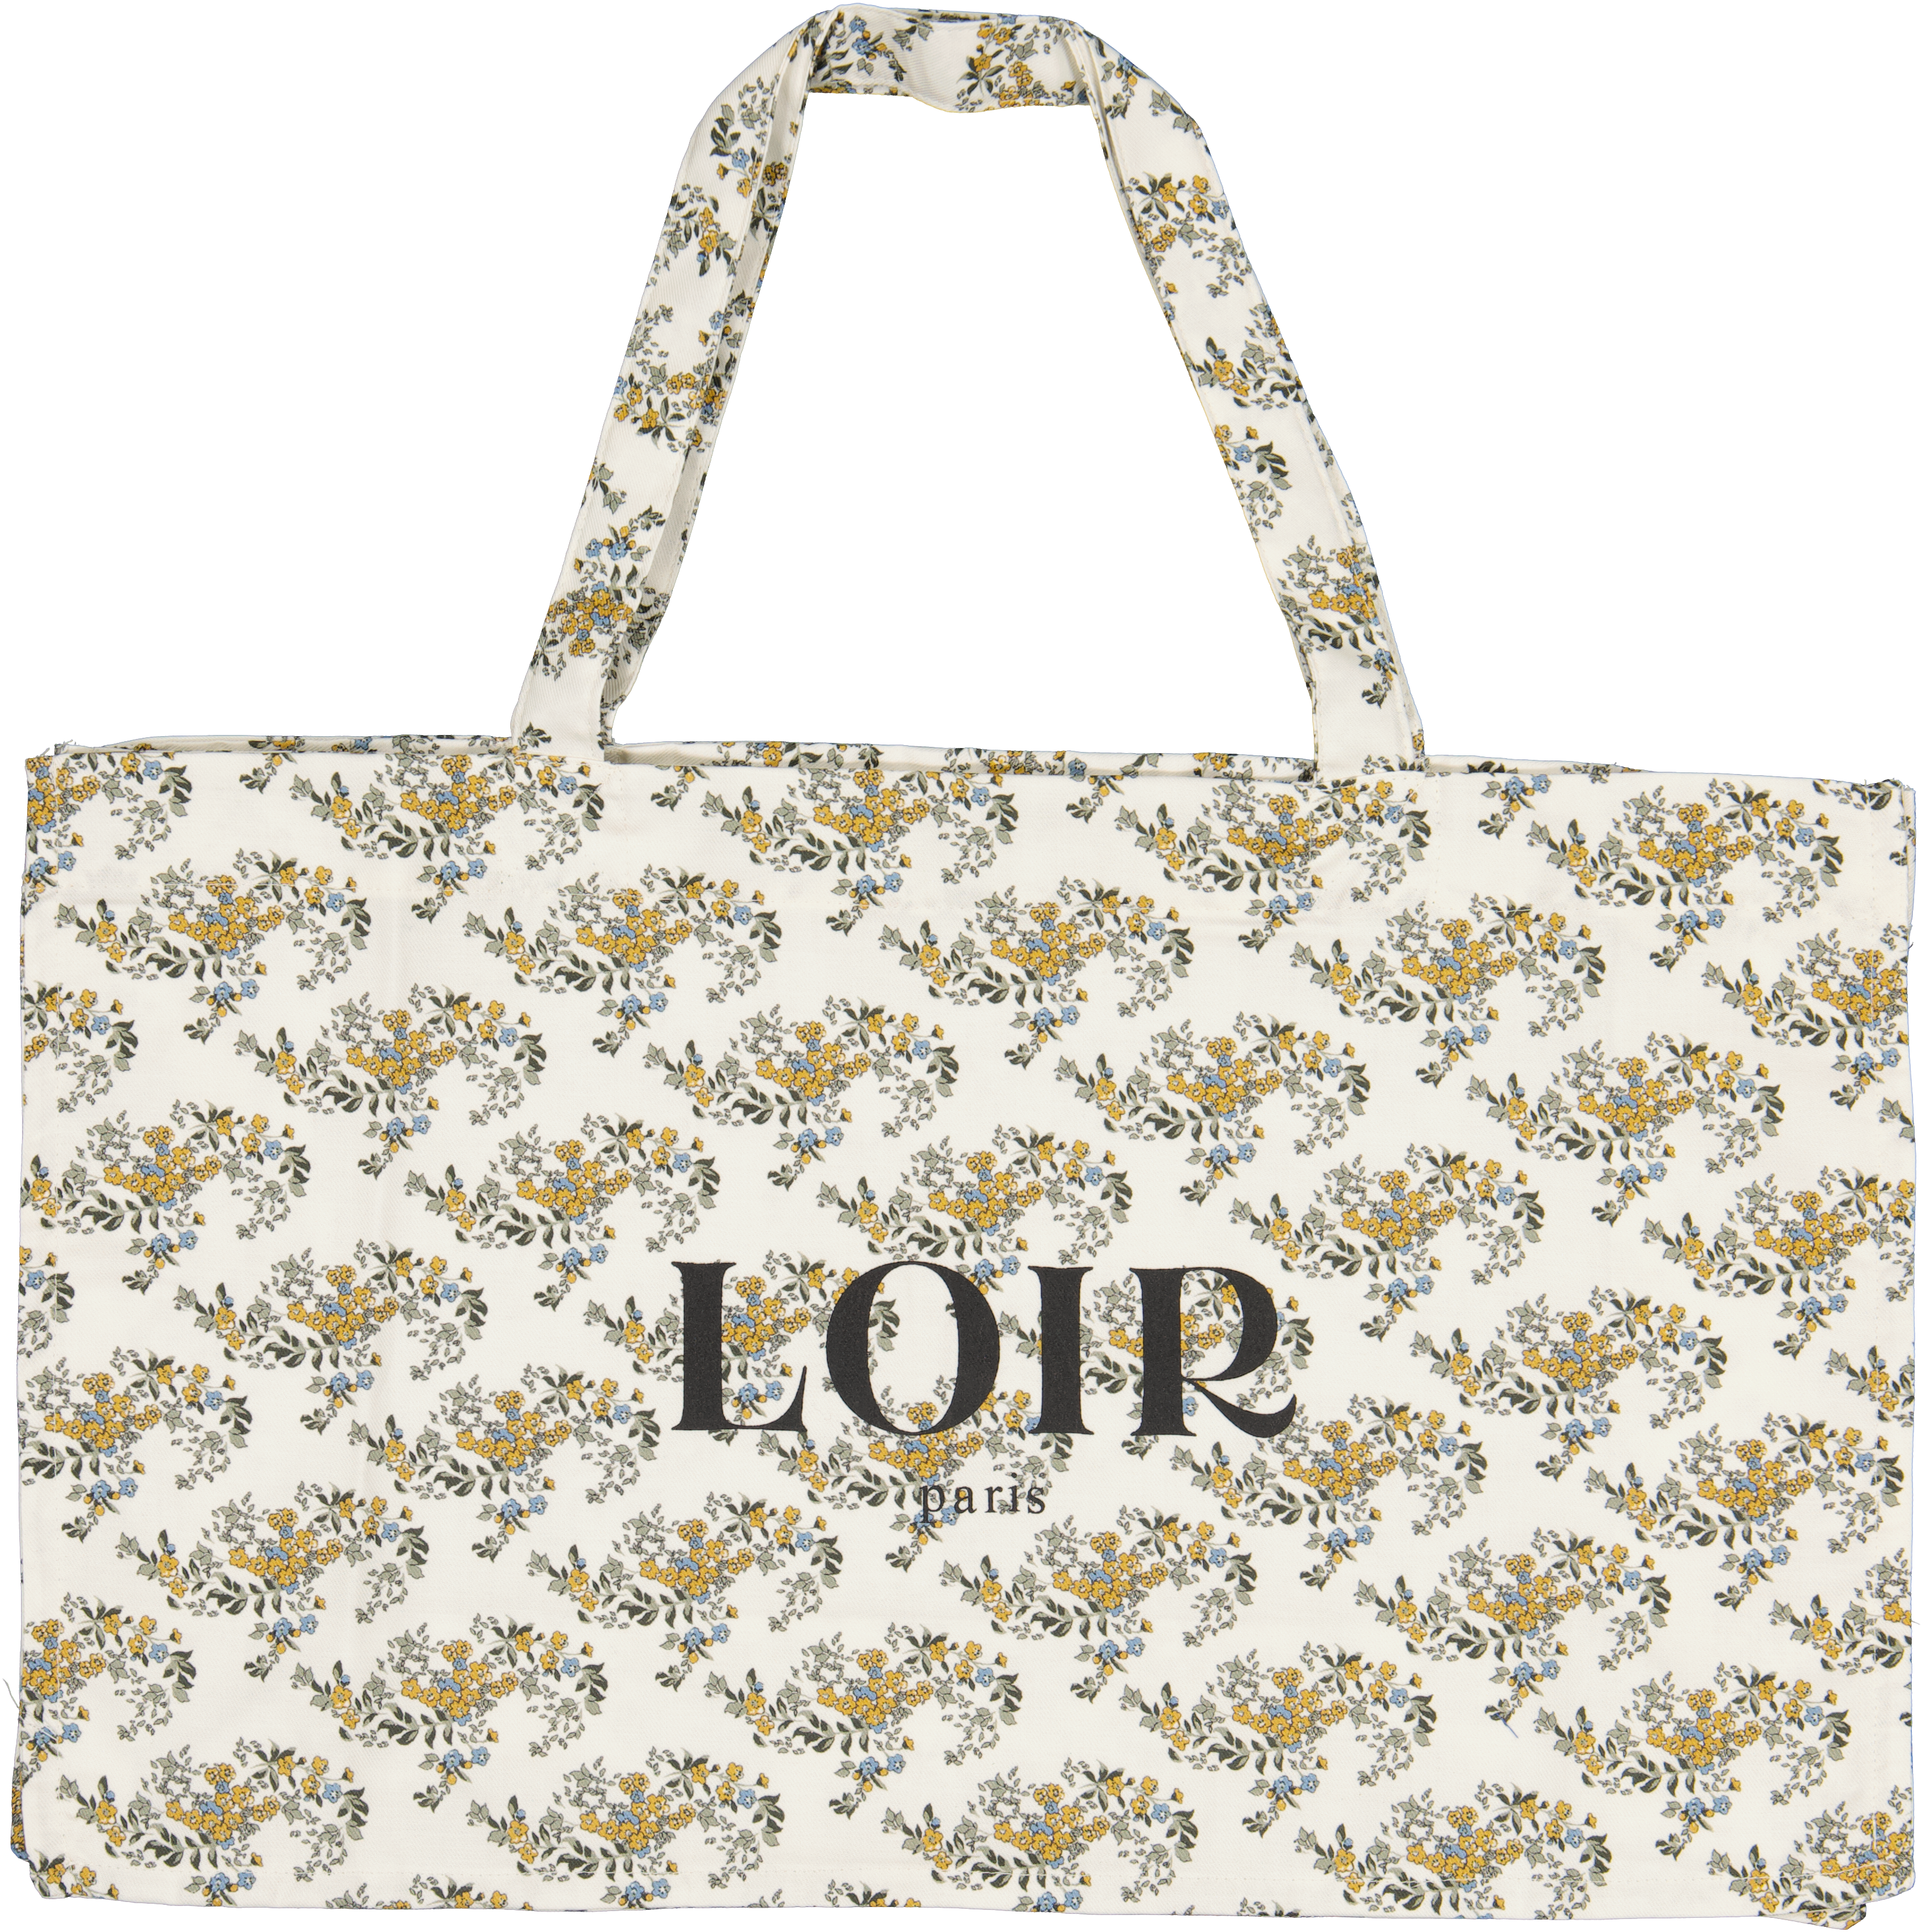 The LOIR Paris tote bag